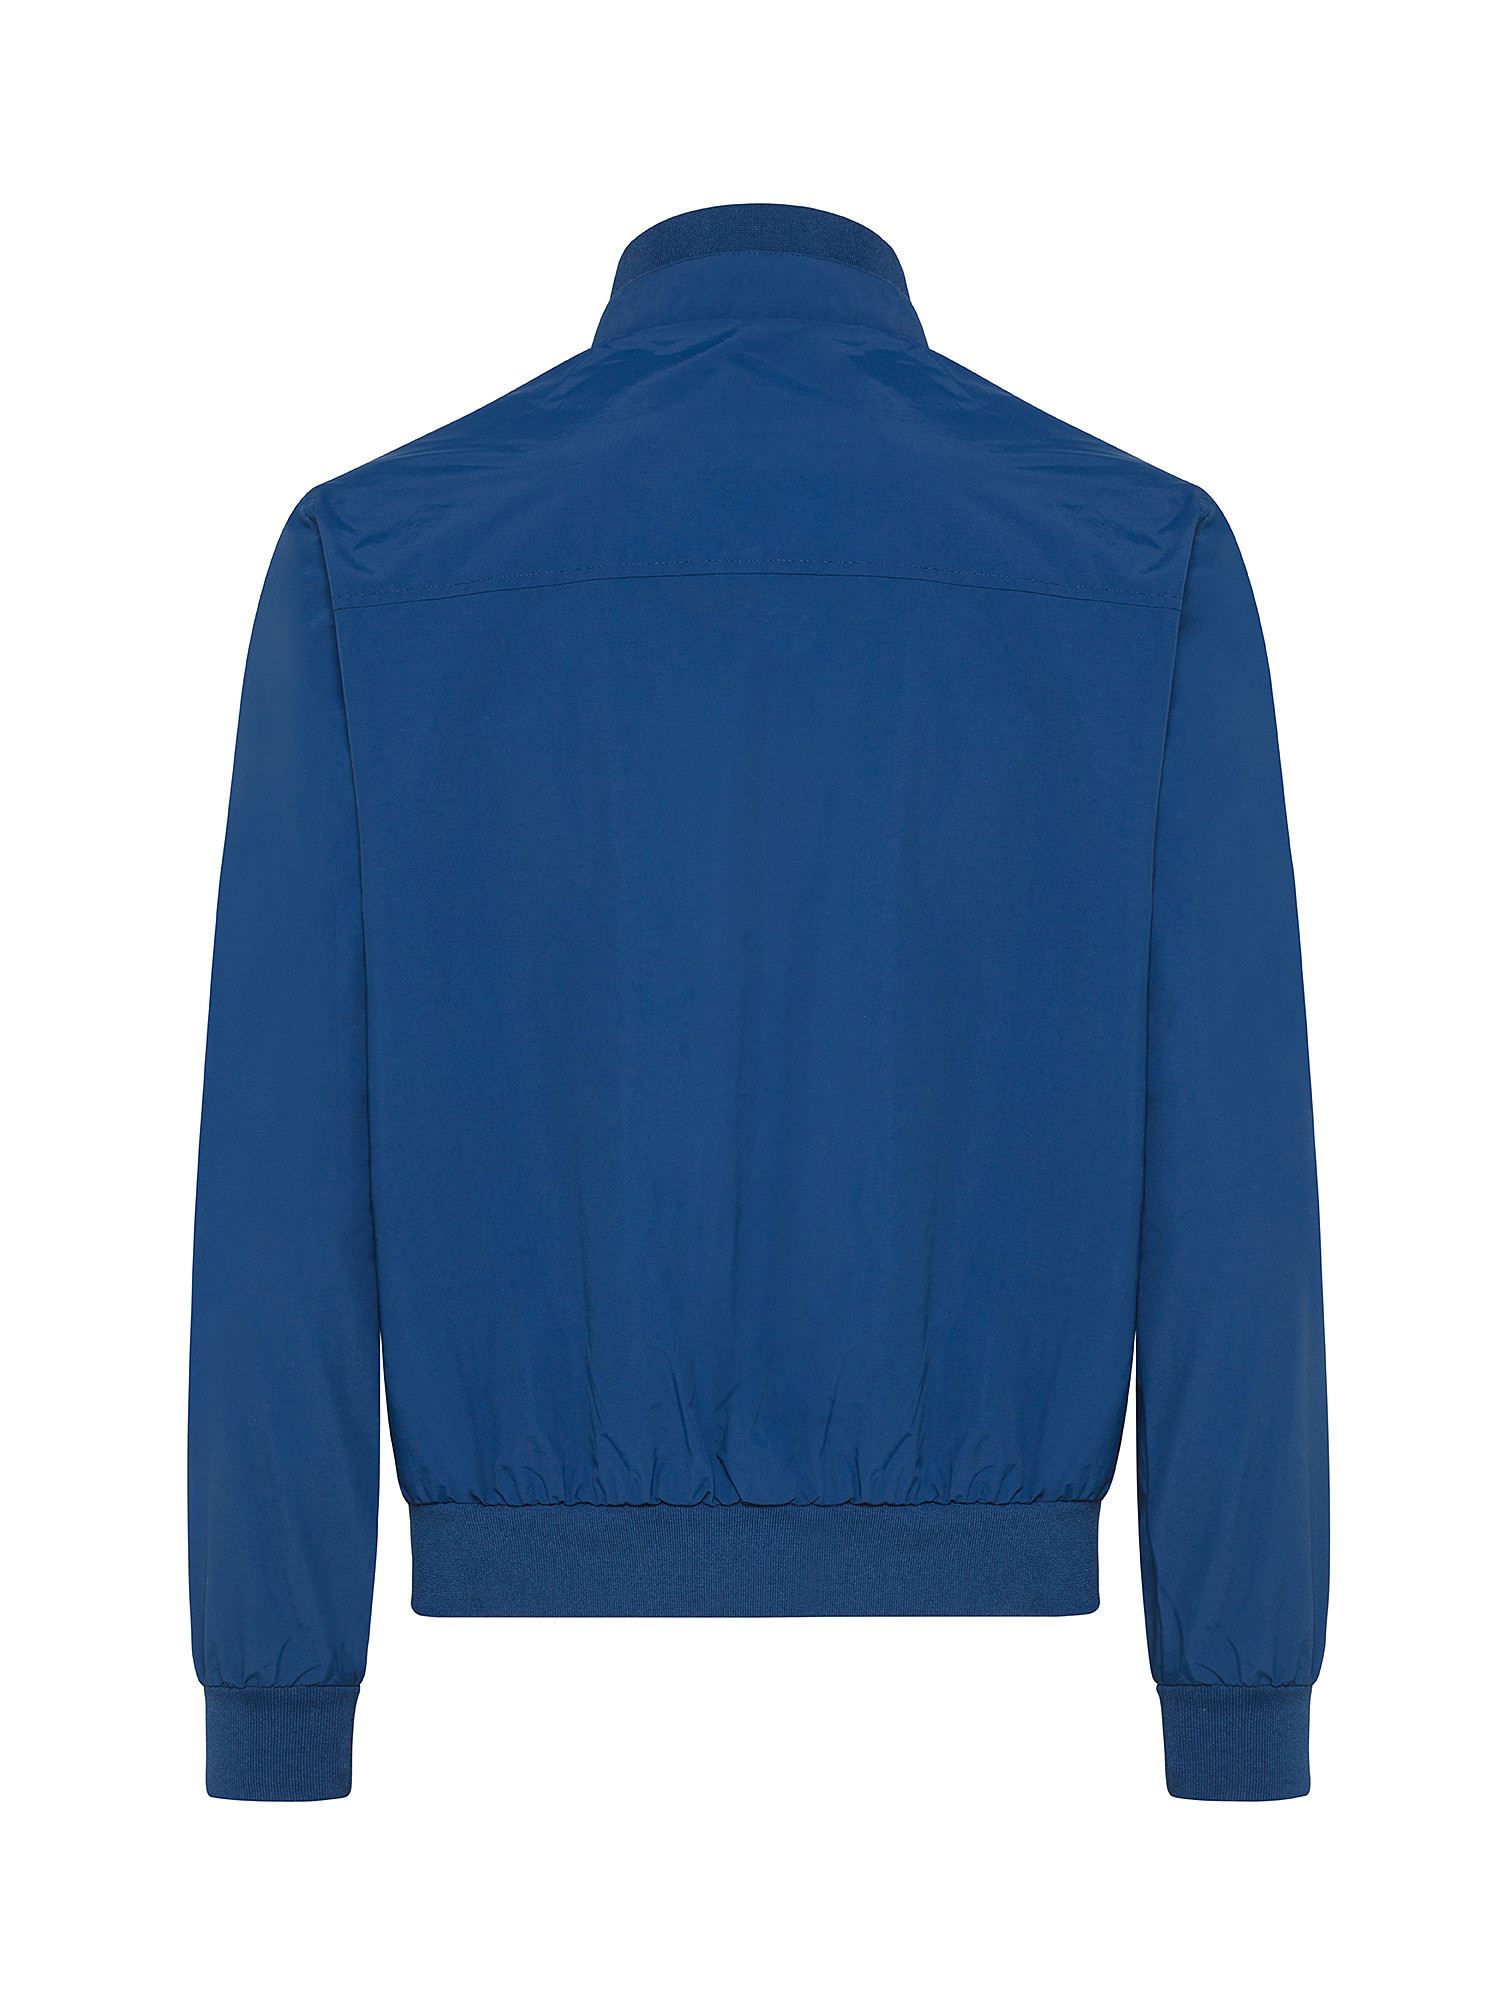 JCT - Full zip jacket, Royal Blue, large image number 1